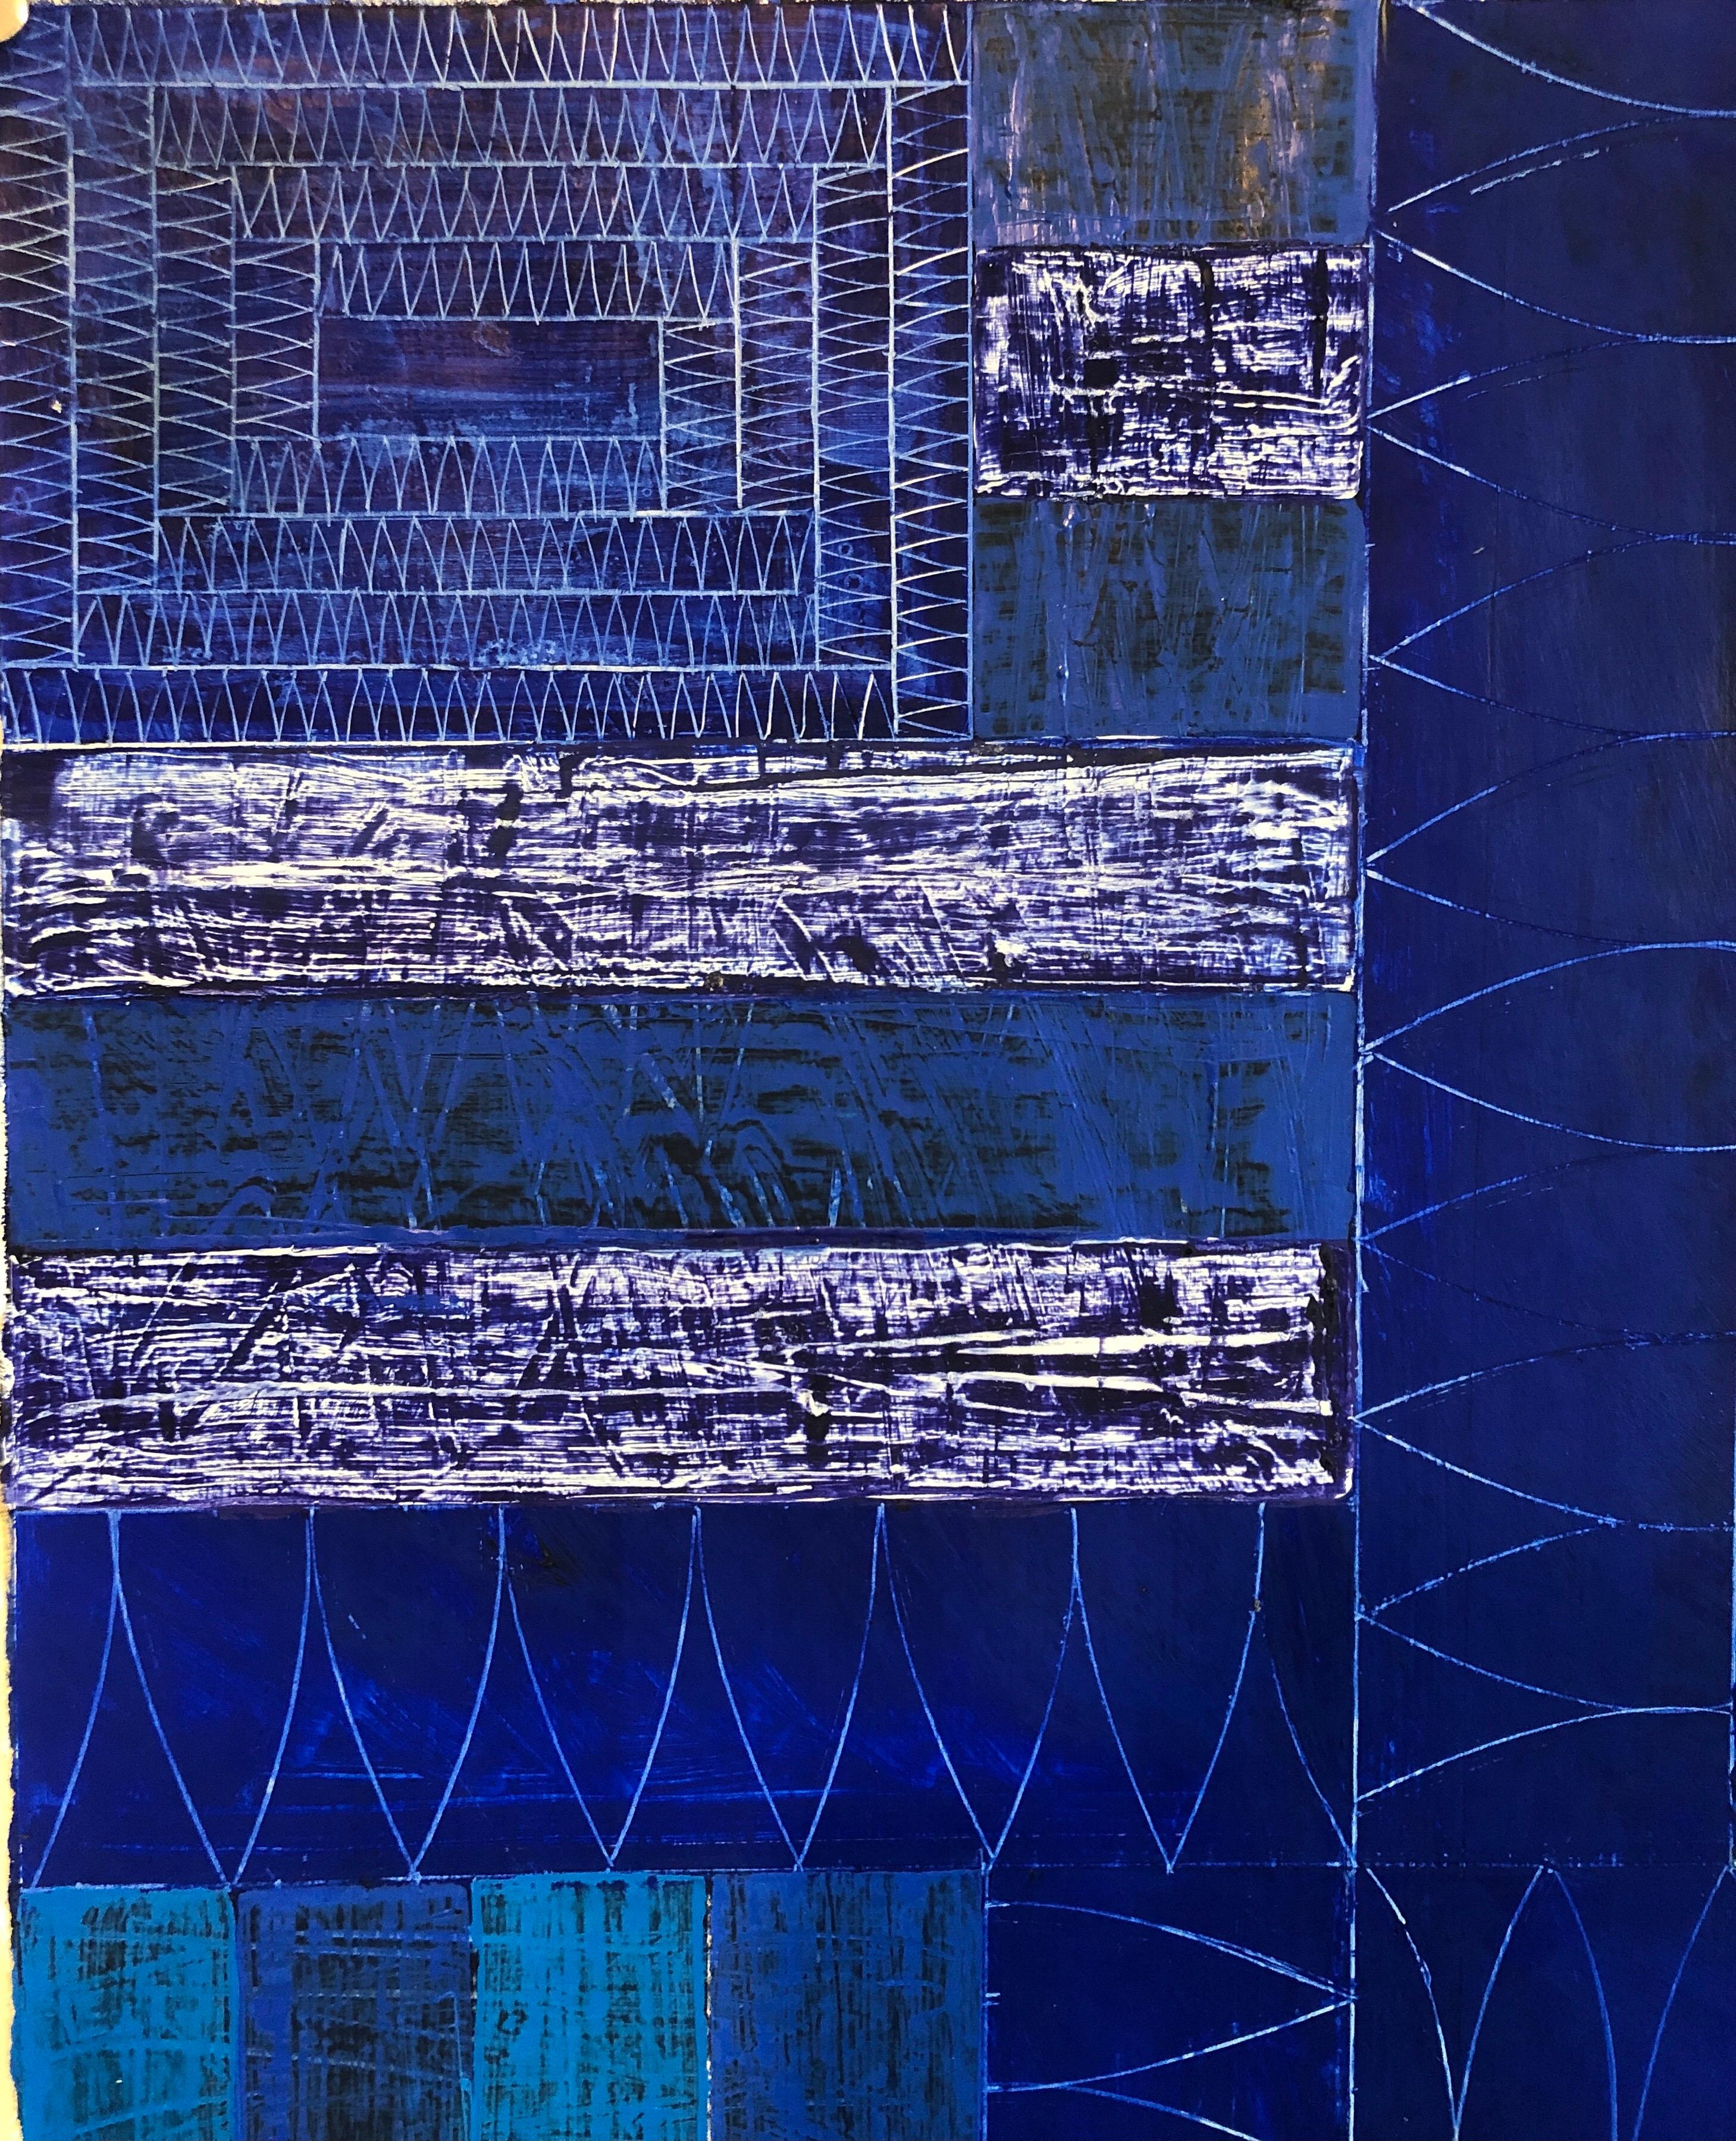 Joan Kahn Indigo Denim Blue Color Abstract Expressionist Modernist Oil Painting For Sale 10